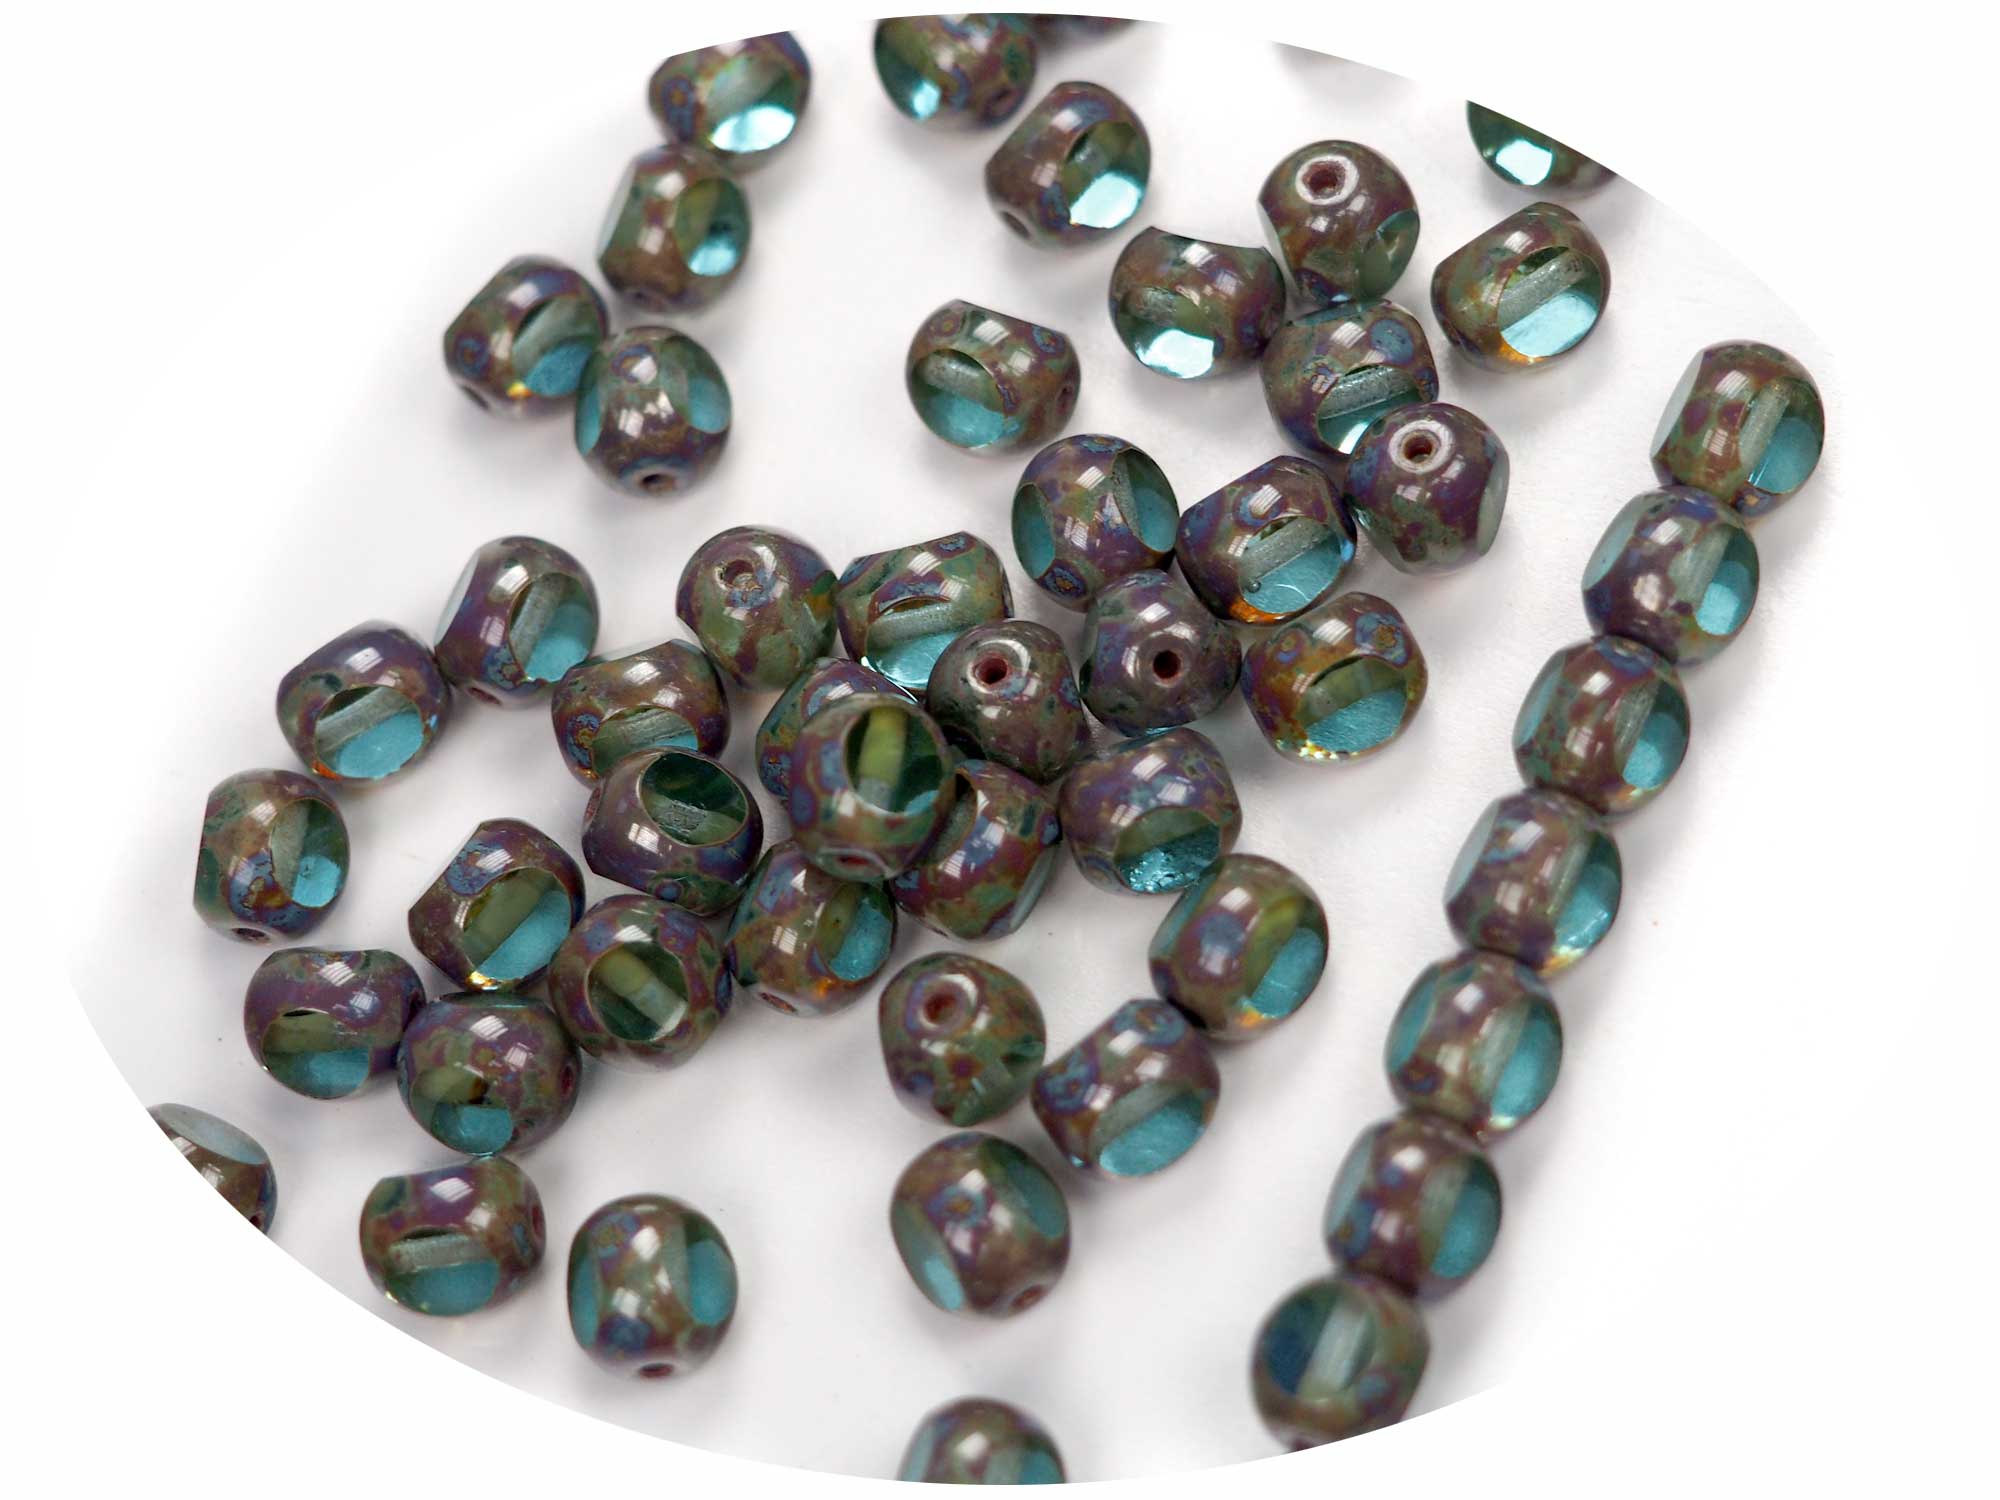 Czech Glass 3-Cut Round Window Beads (Soccer Ball Bead) Art. 151-19501 in size 8mm, Light Green Picasso coated, 36pcs, P878